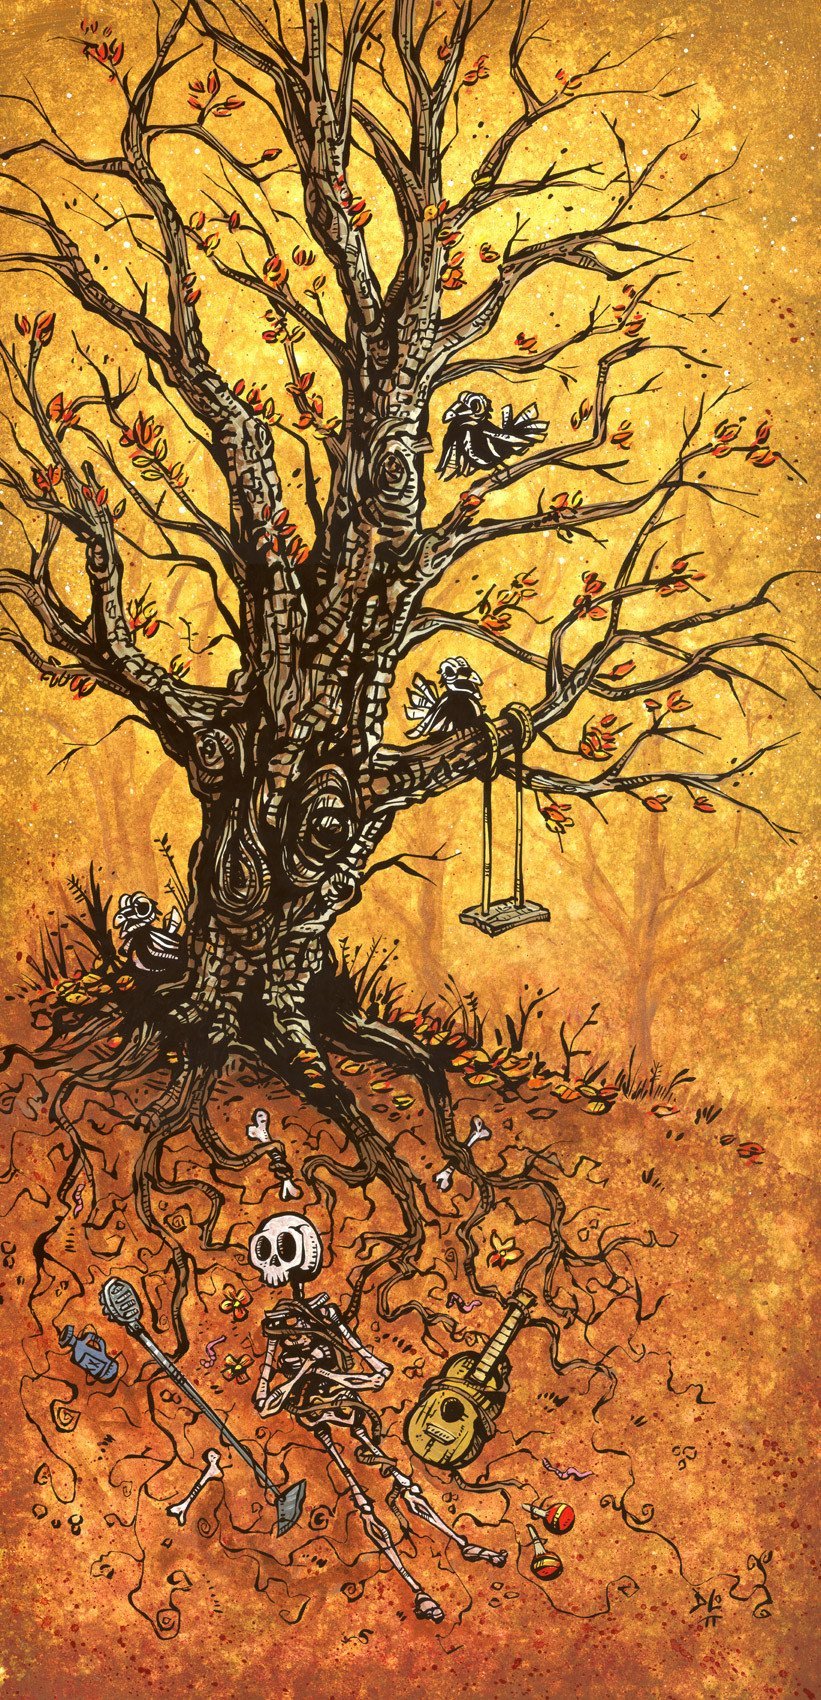 Tree of Life by Day of the Dead Artist David Lozeau, Day of the Dead Art, Dia de los Muertos Art, Dia de los Muertos Artist